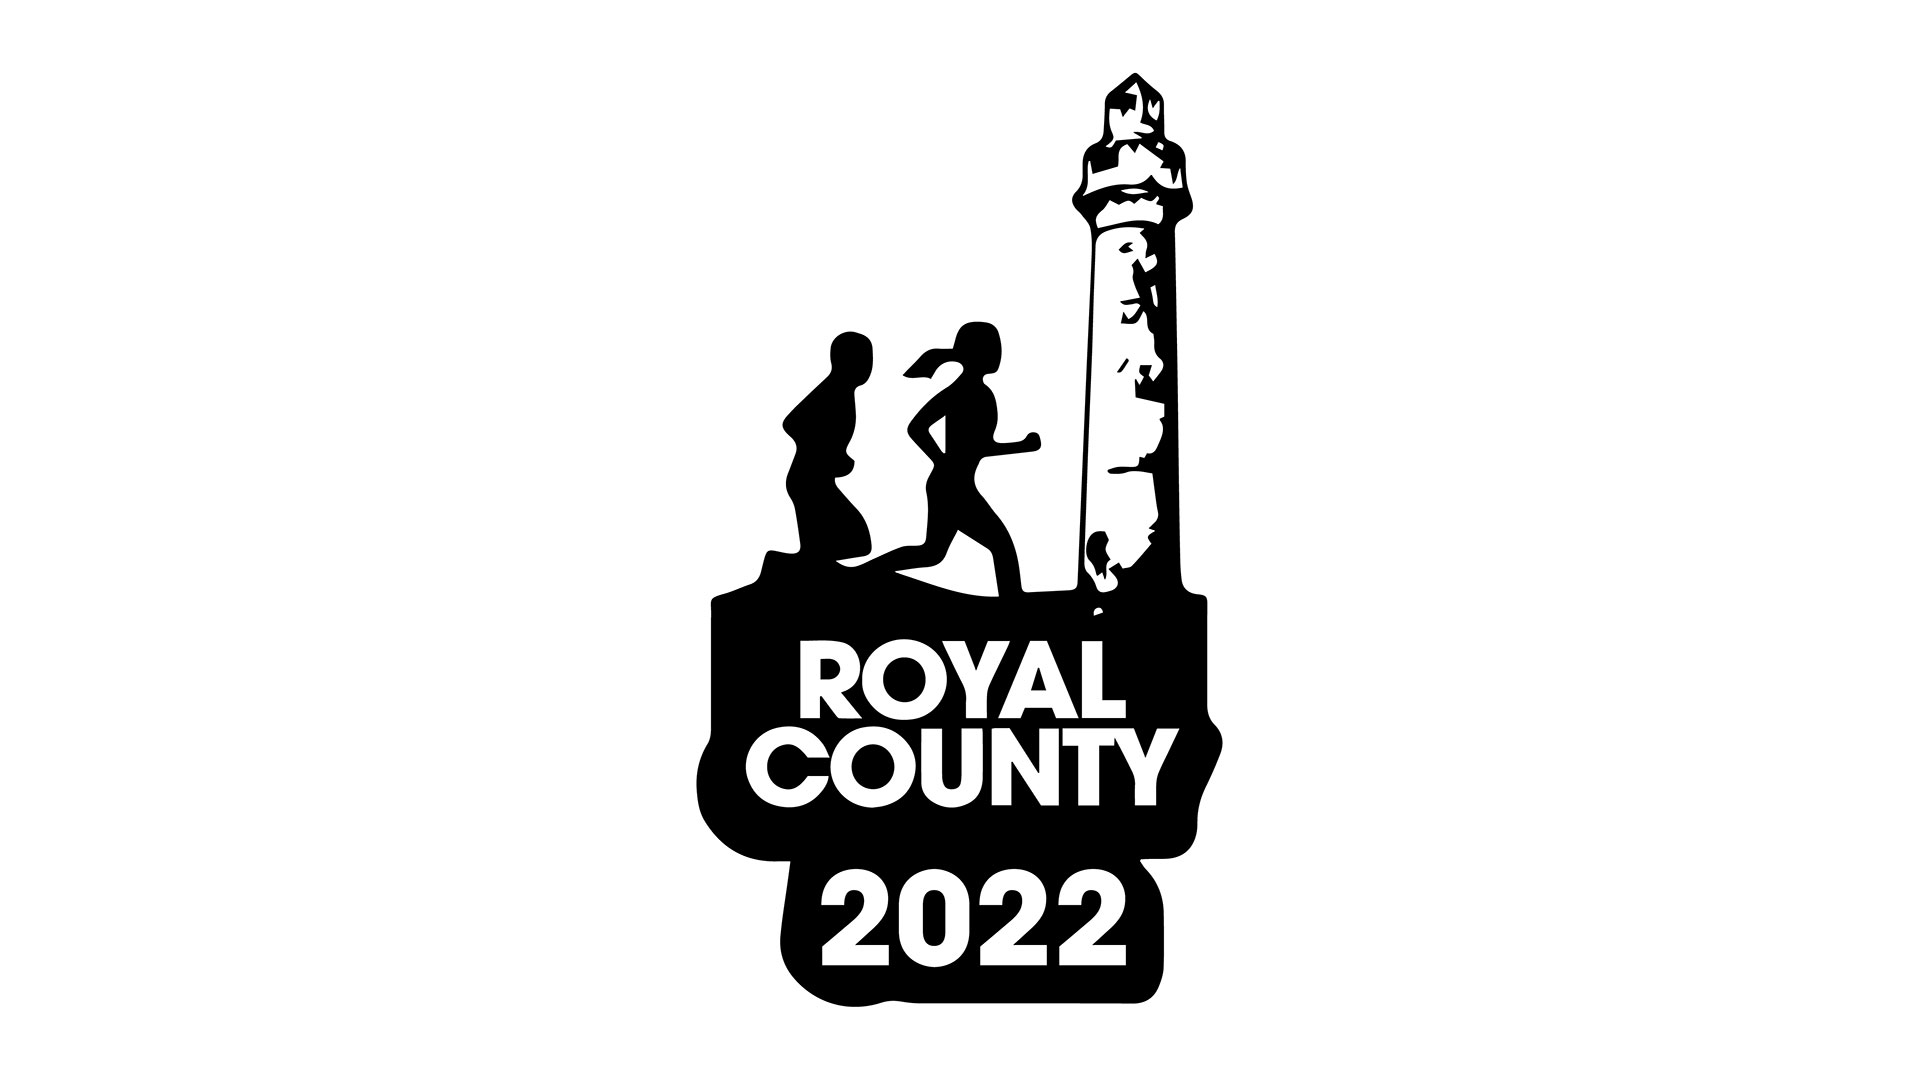 Royal County 5km & 10km